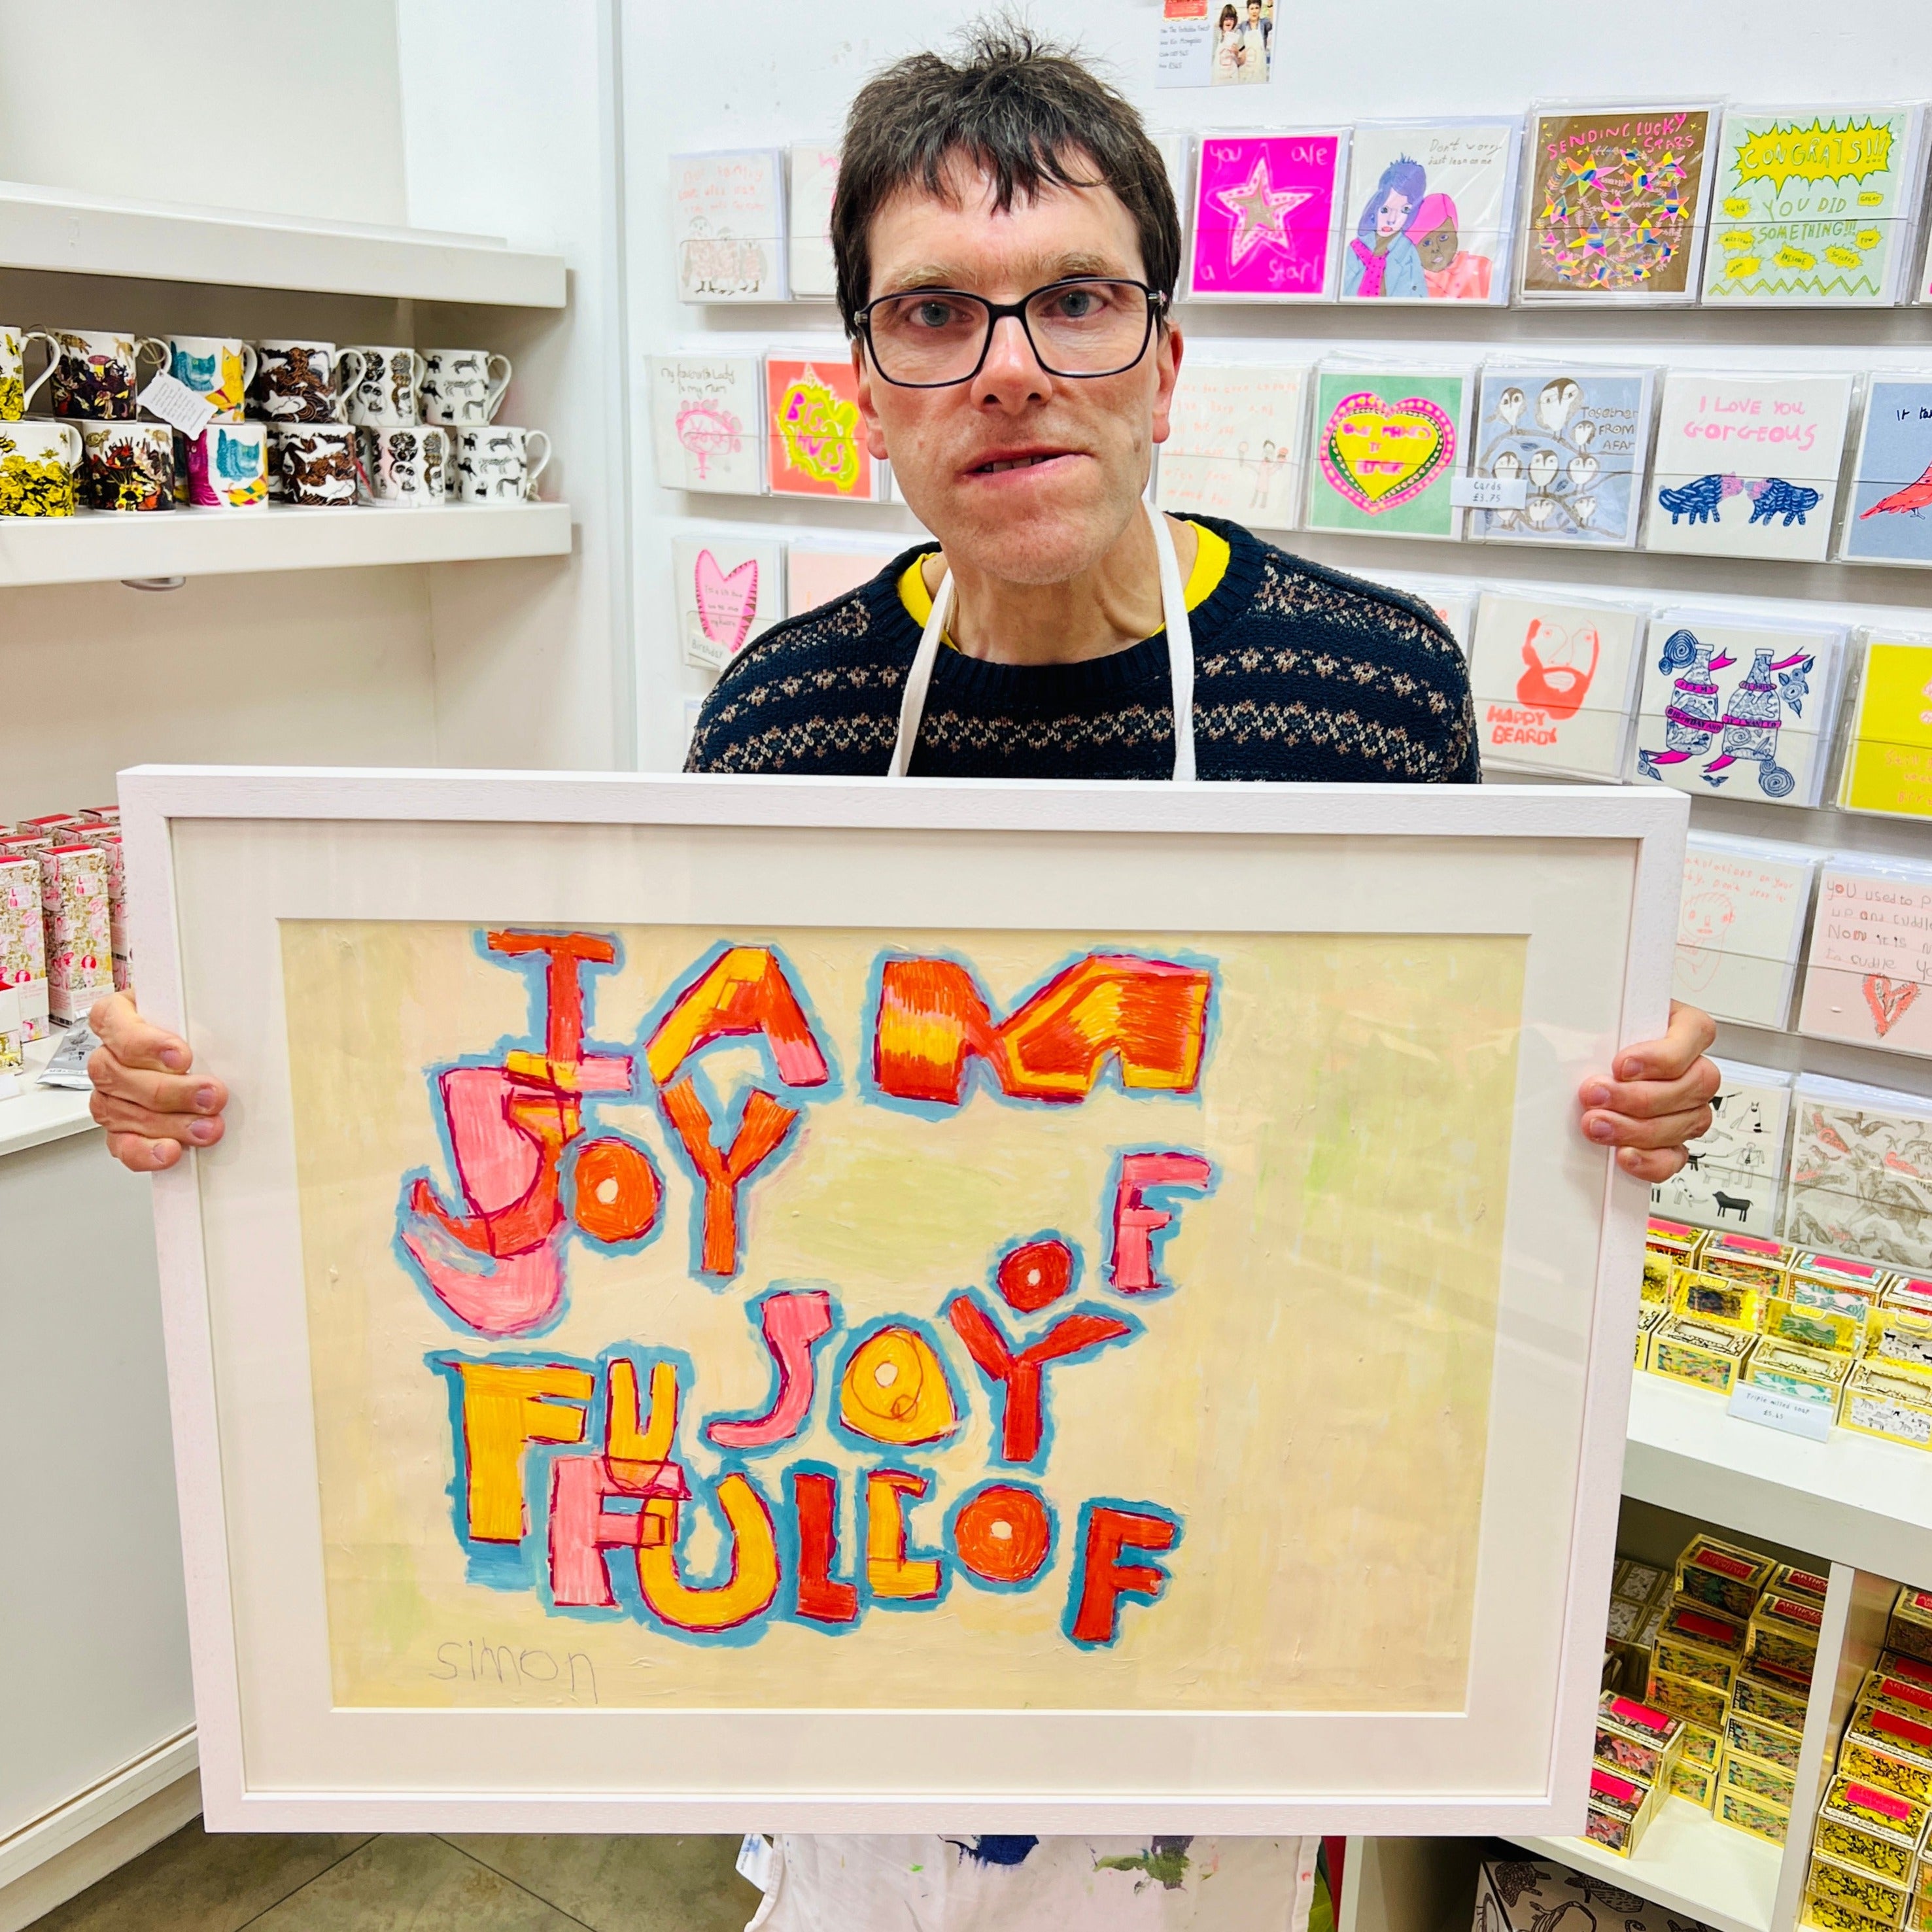 Male artist holding Framed painting of the words 'I am full of joy"